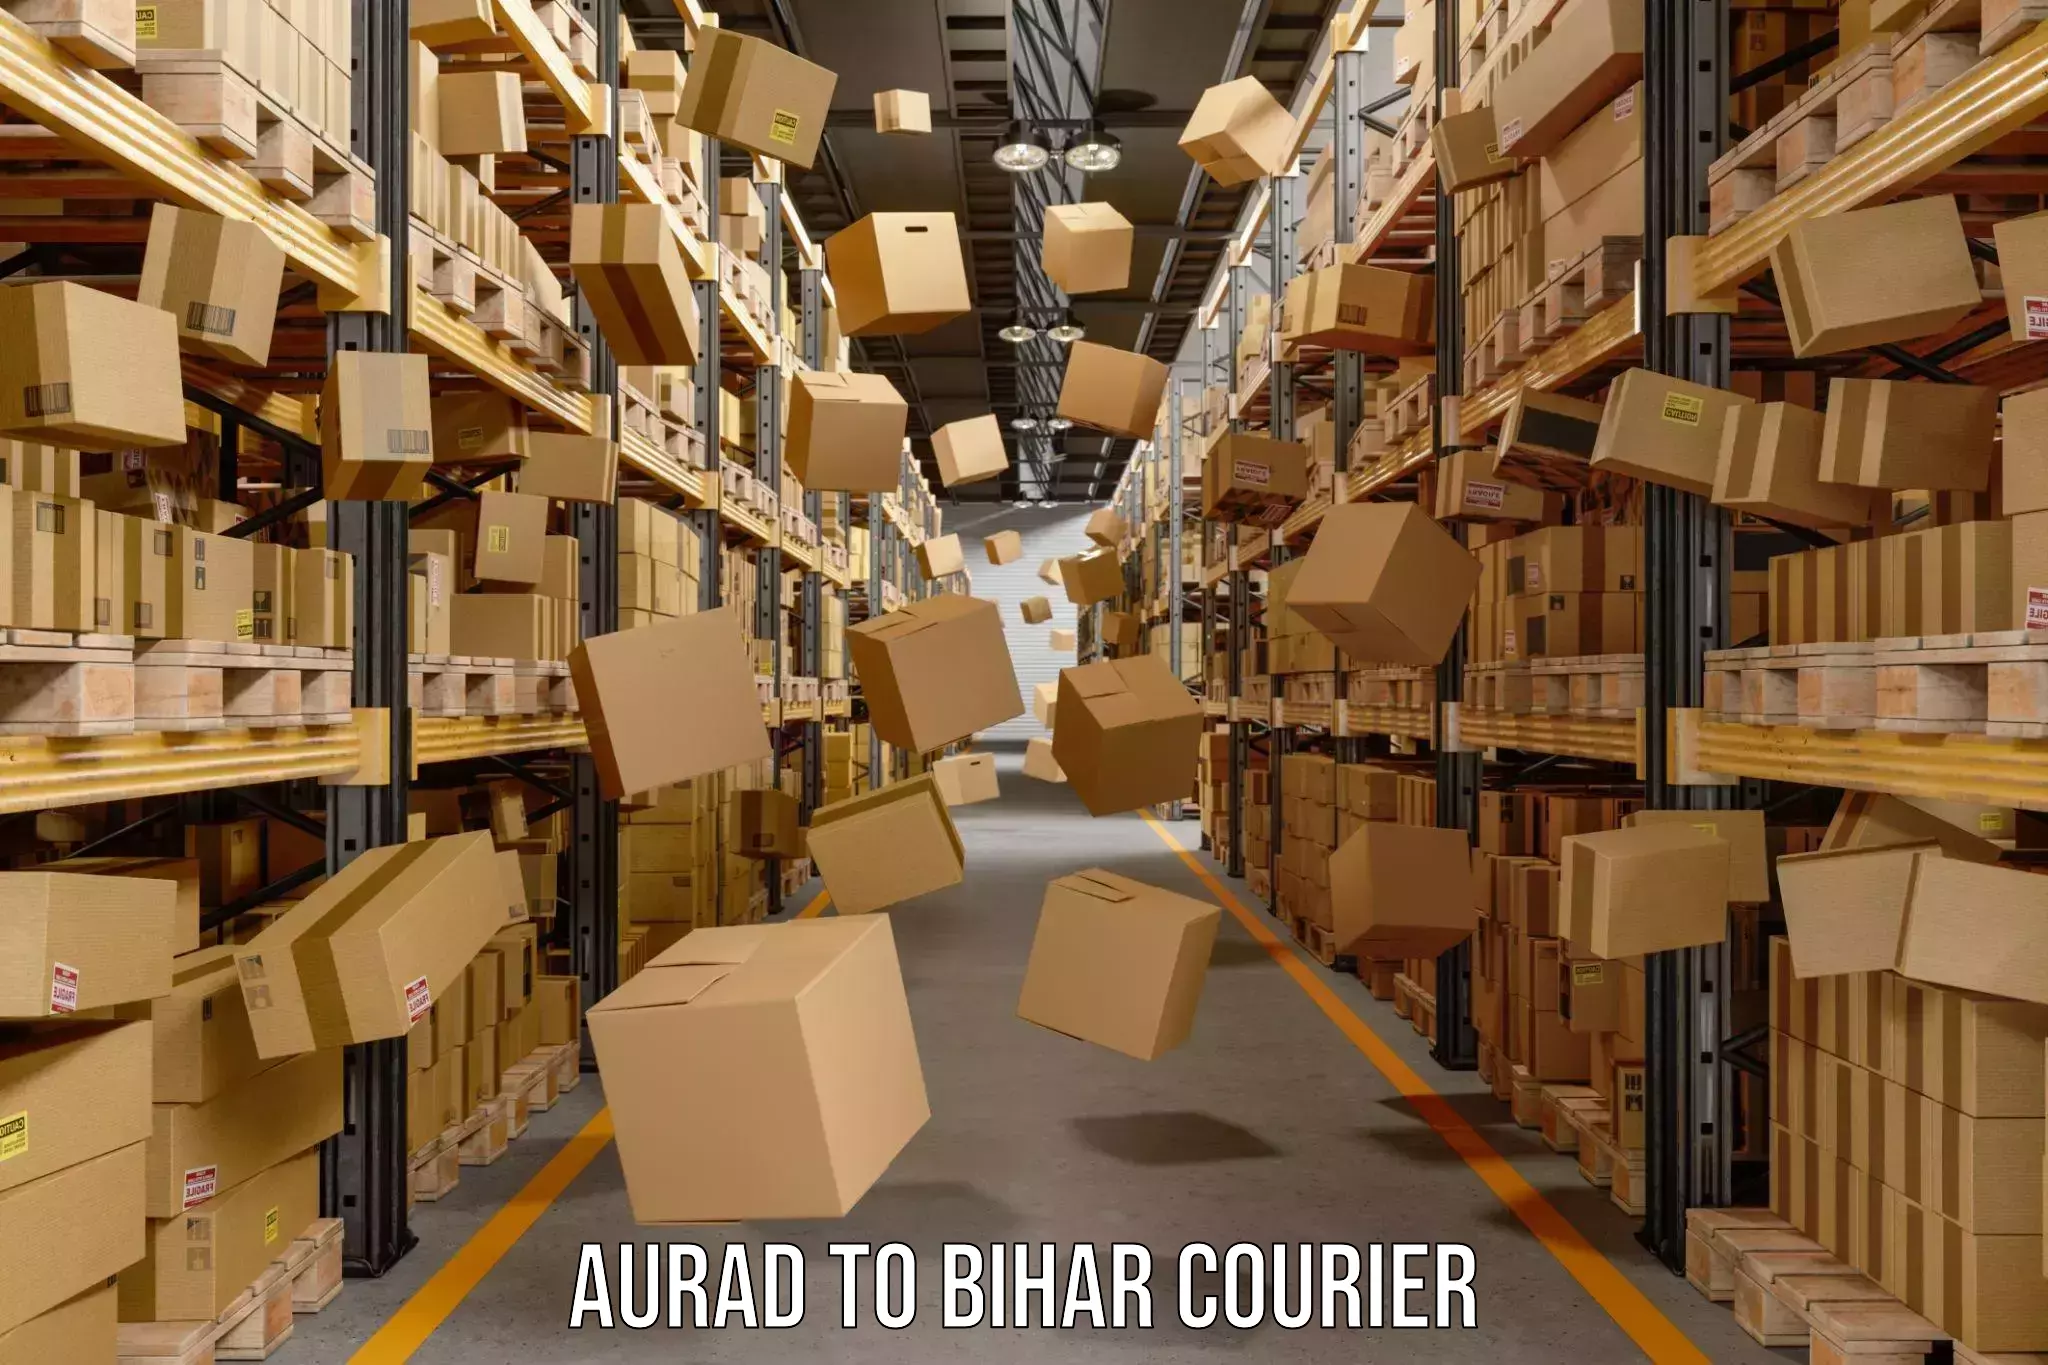 Courier service innovation Aurad to Bihar